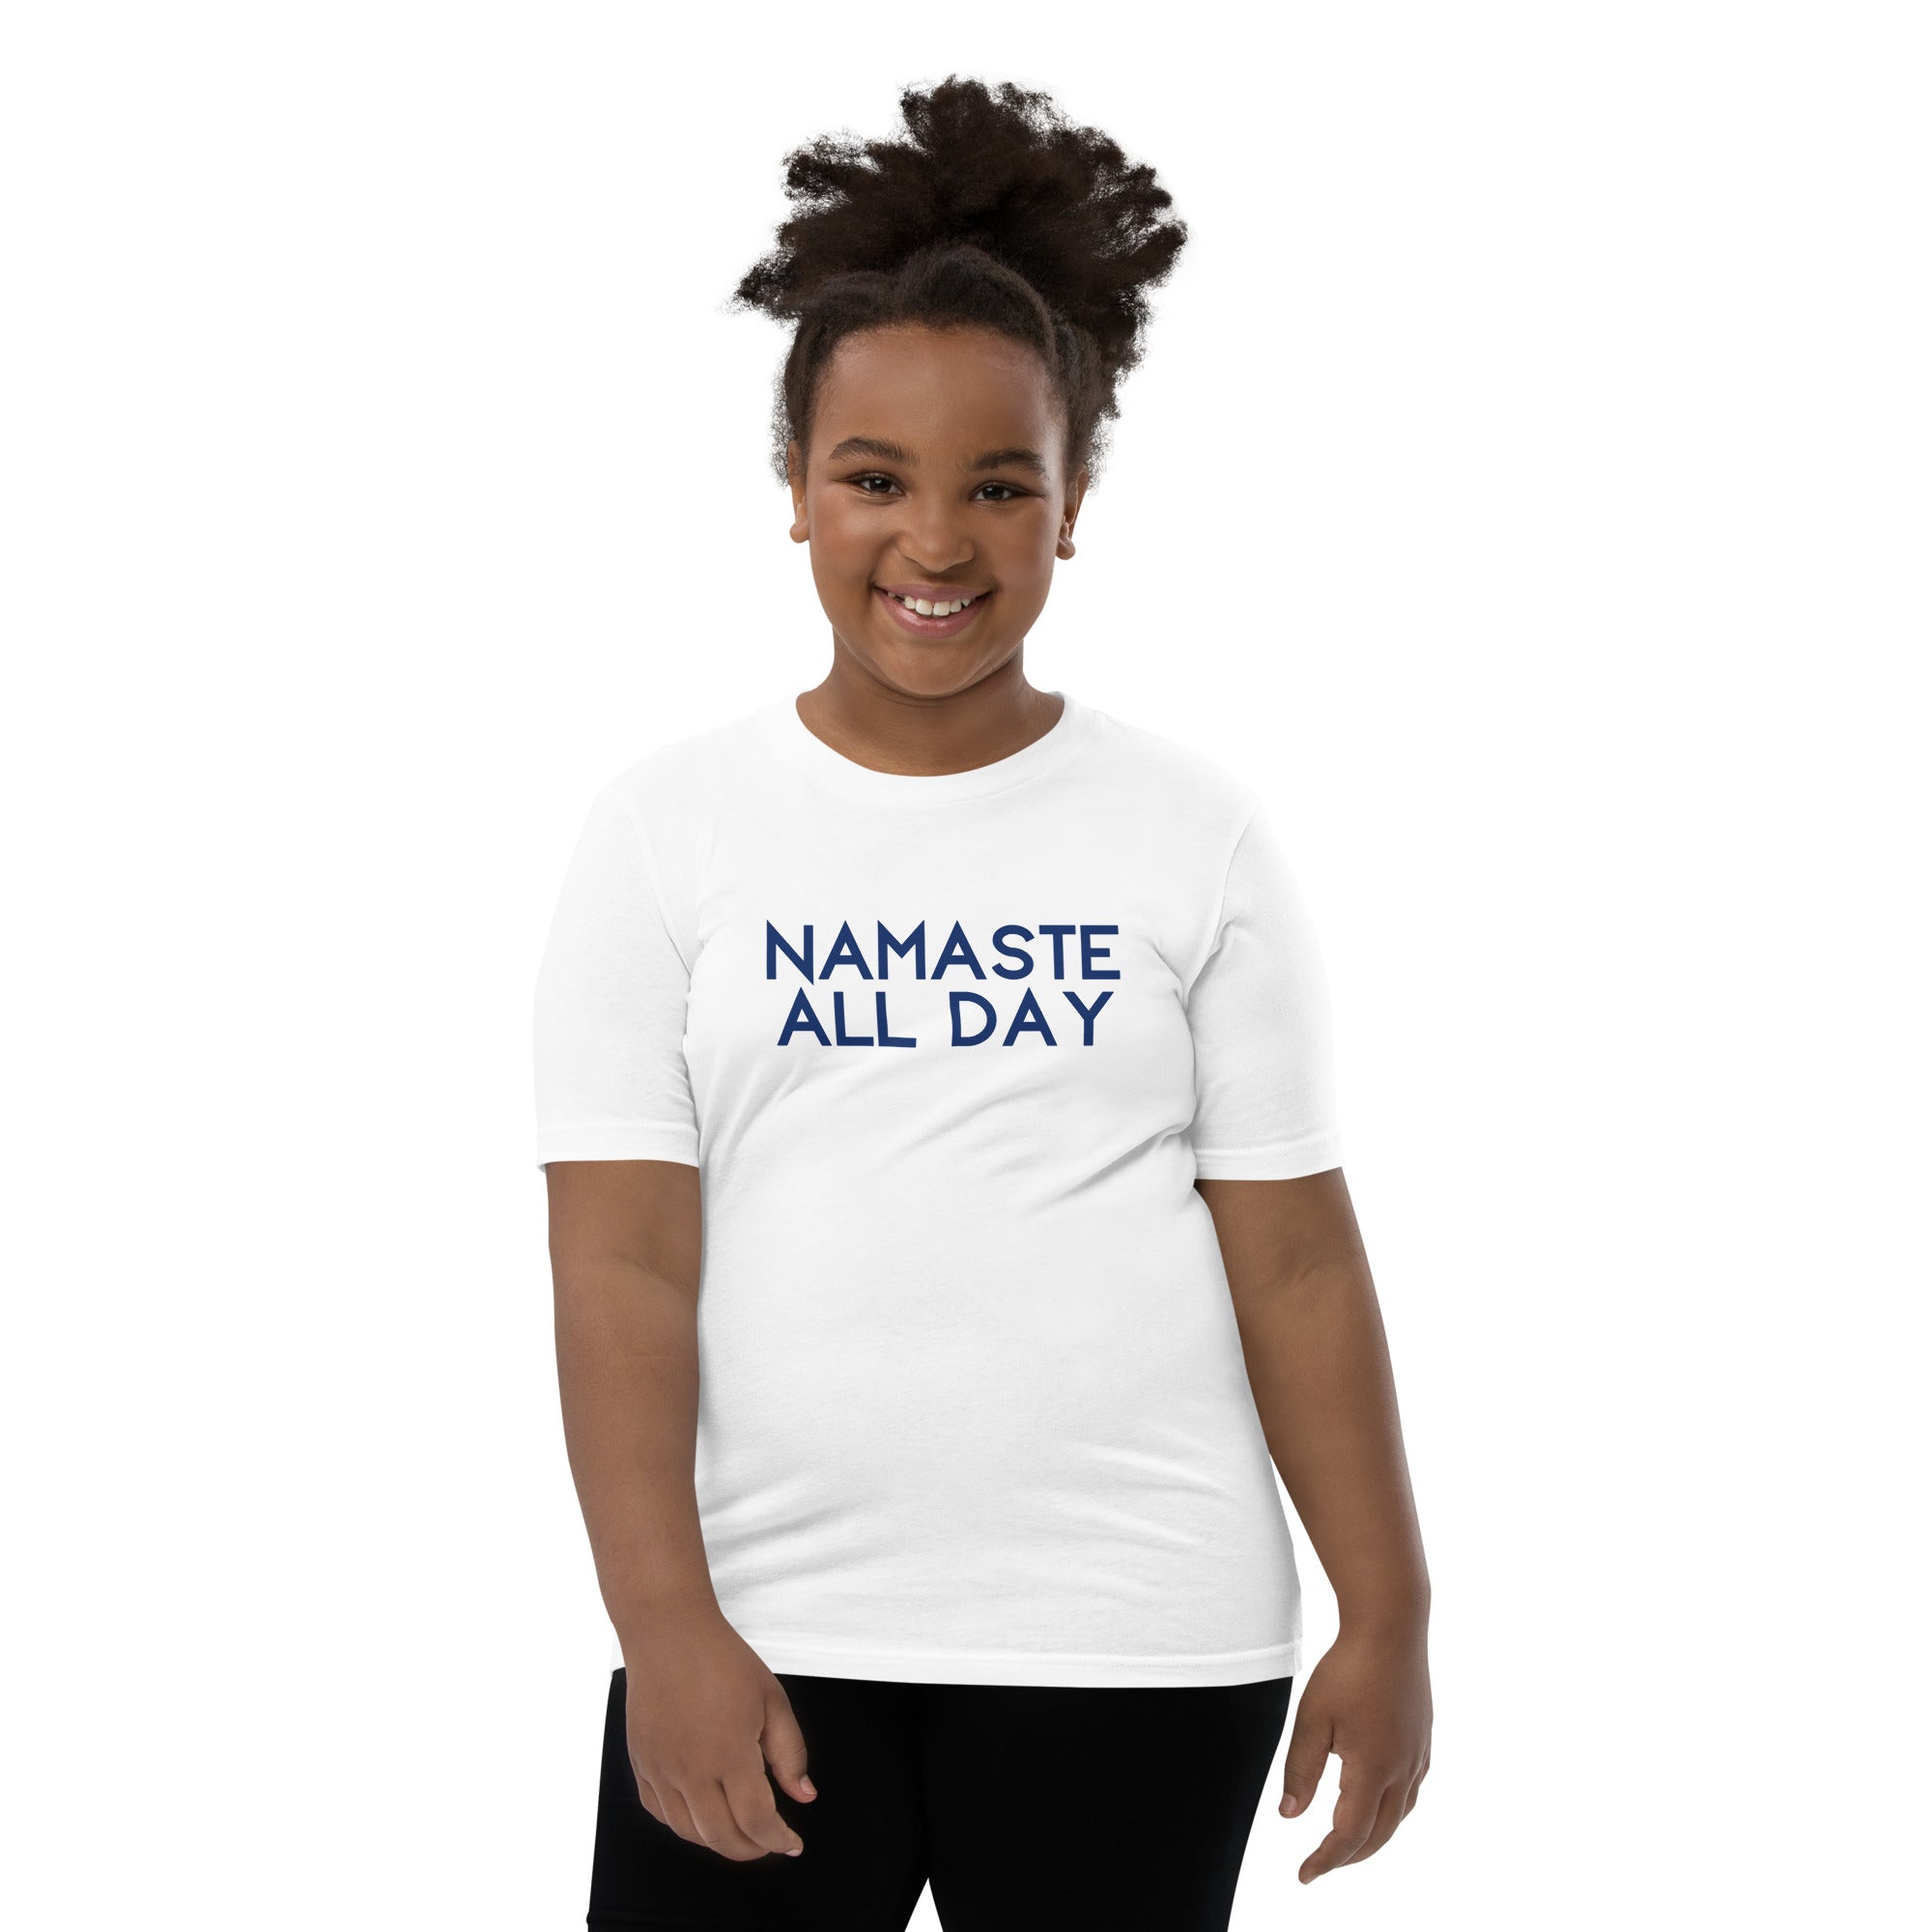 Namaste All Day Youth